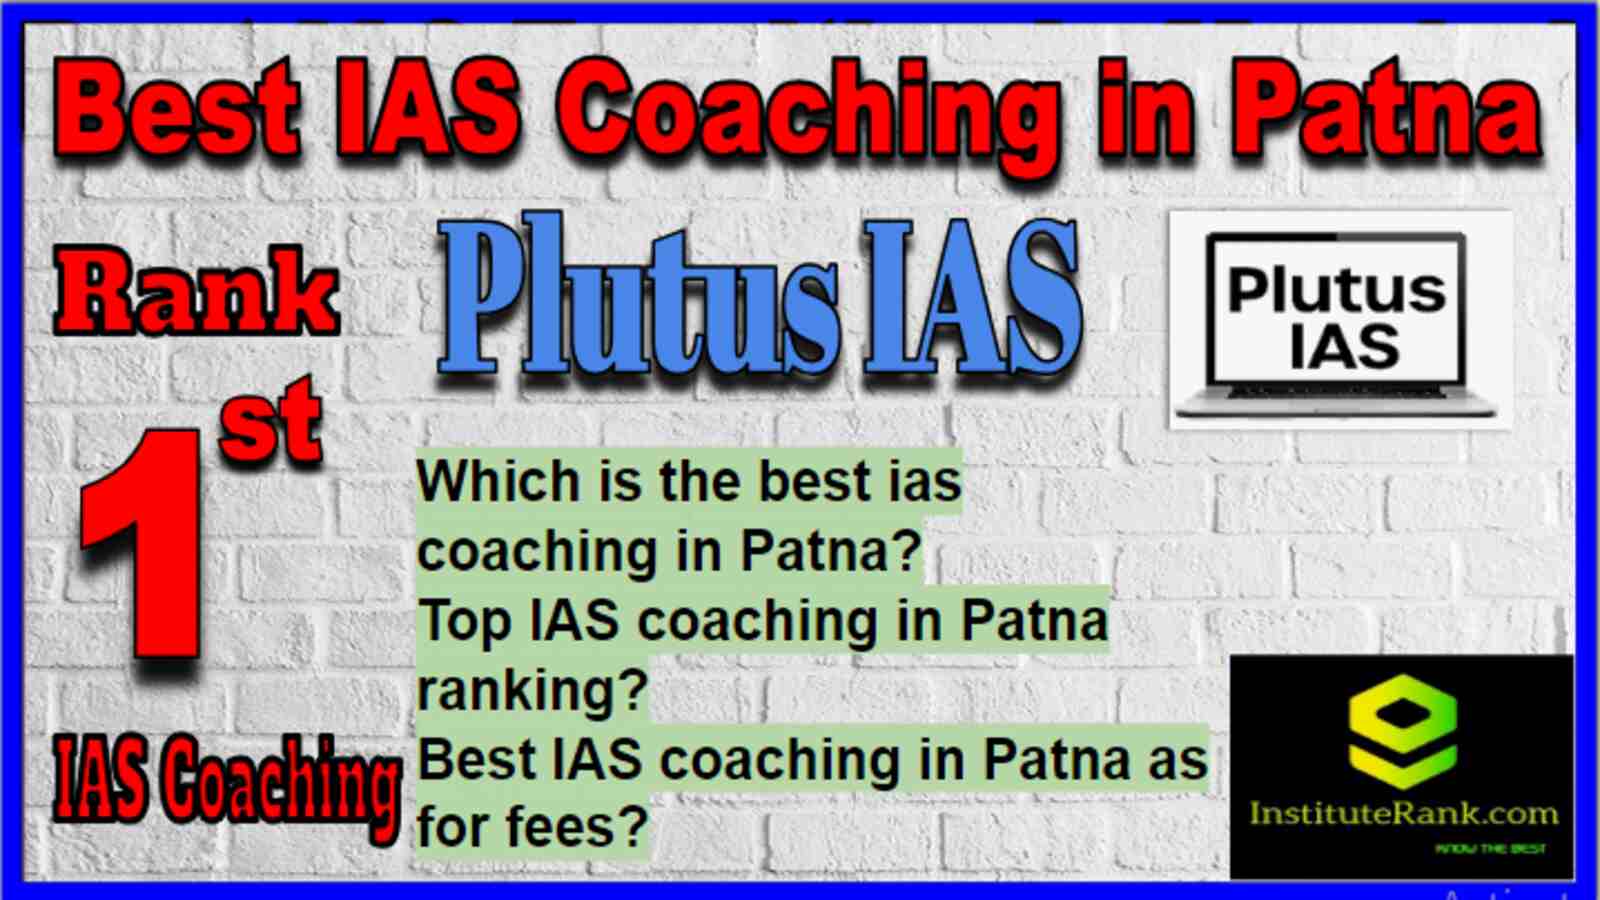 Rank 1 Best IAS Coaching in Patna